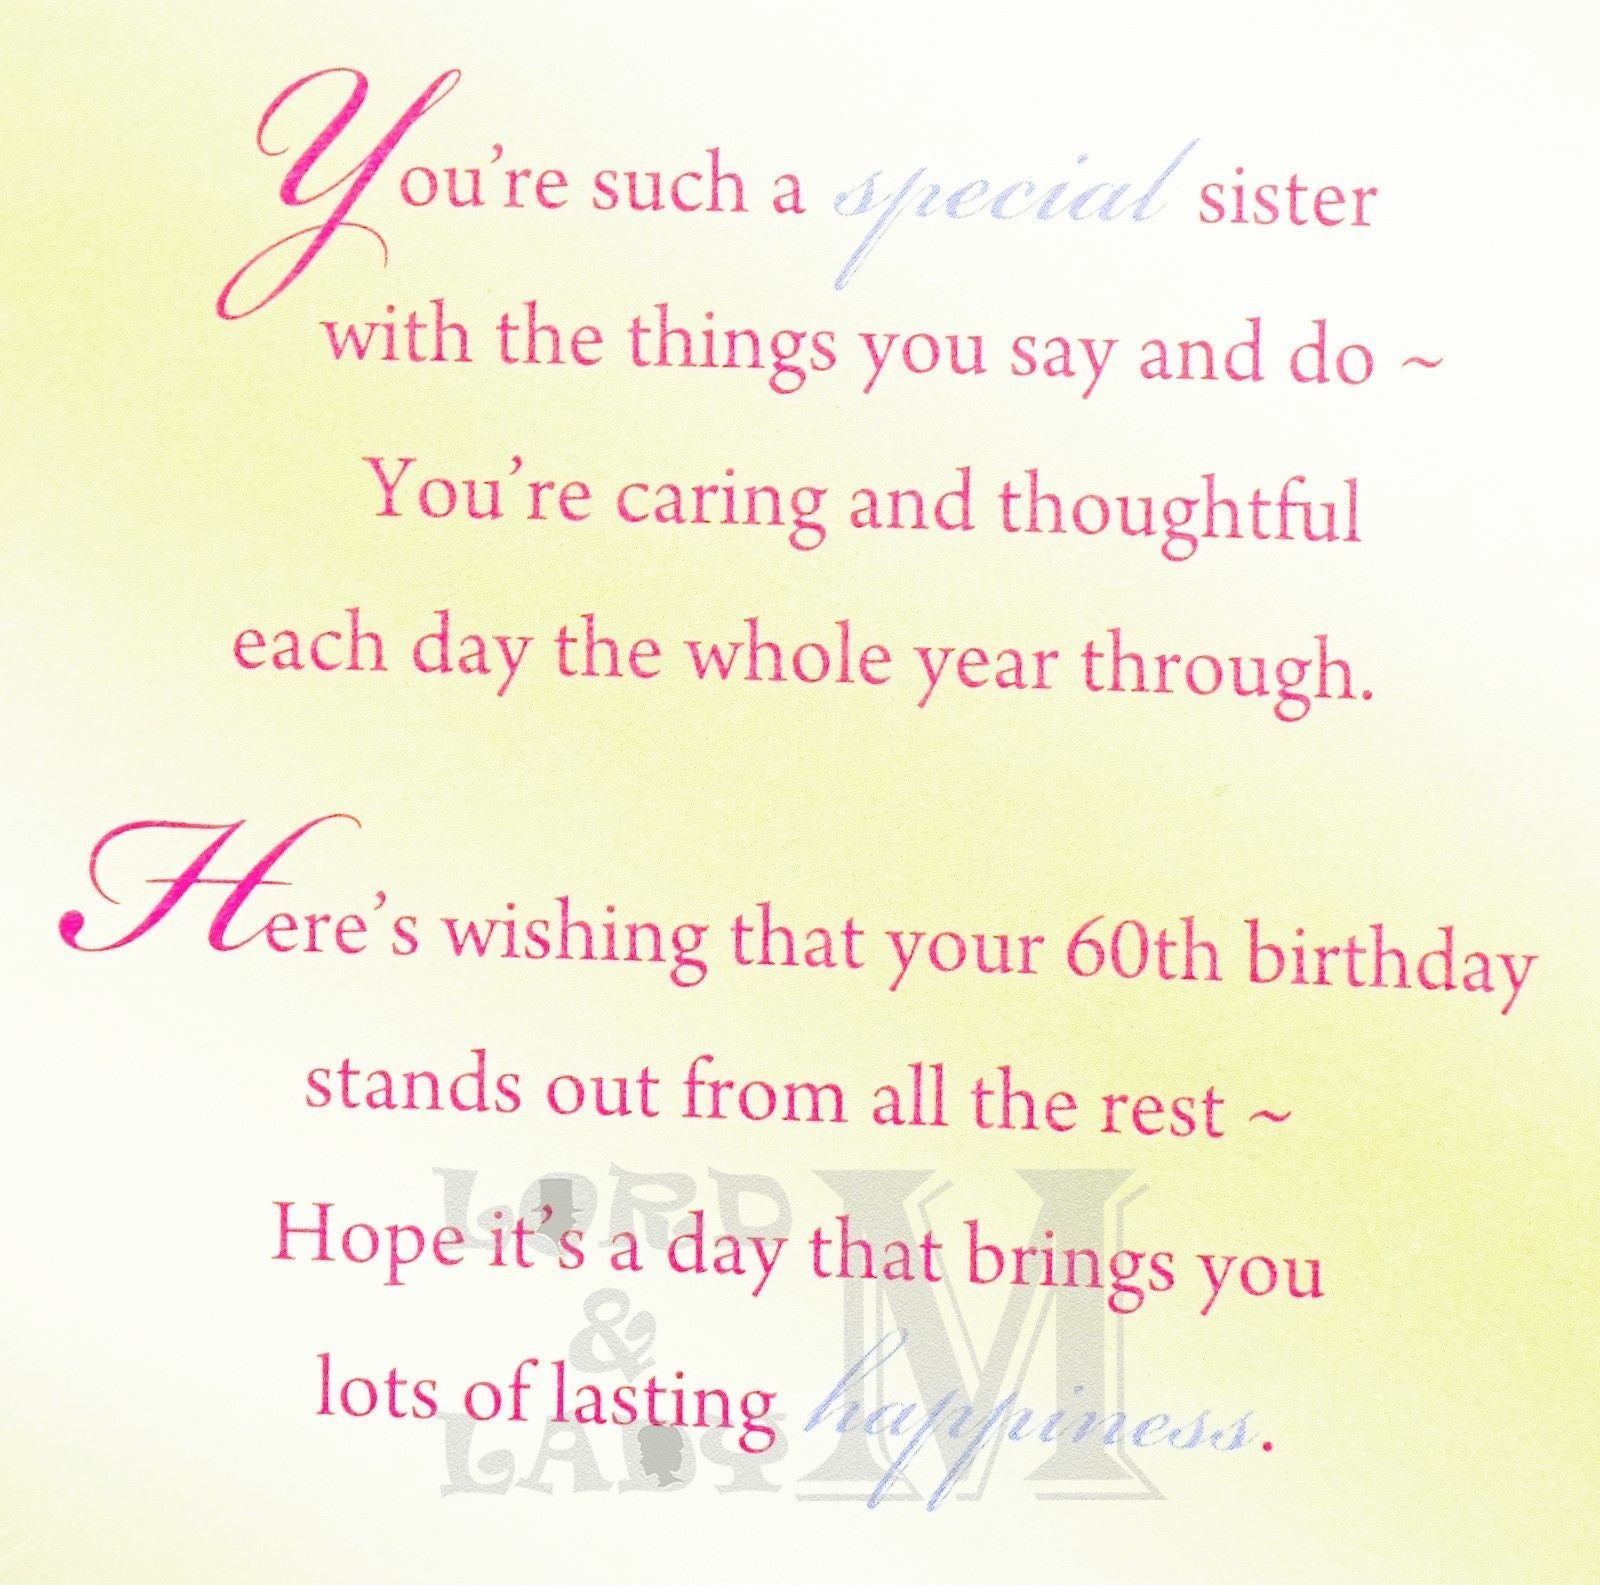 23cm - Happy Birthday Sister 60 Today! - GH